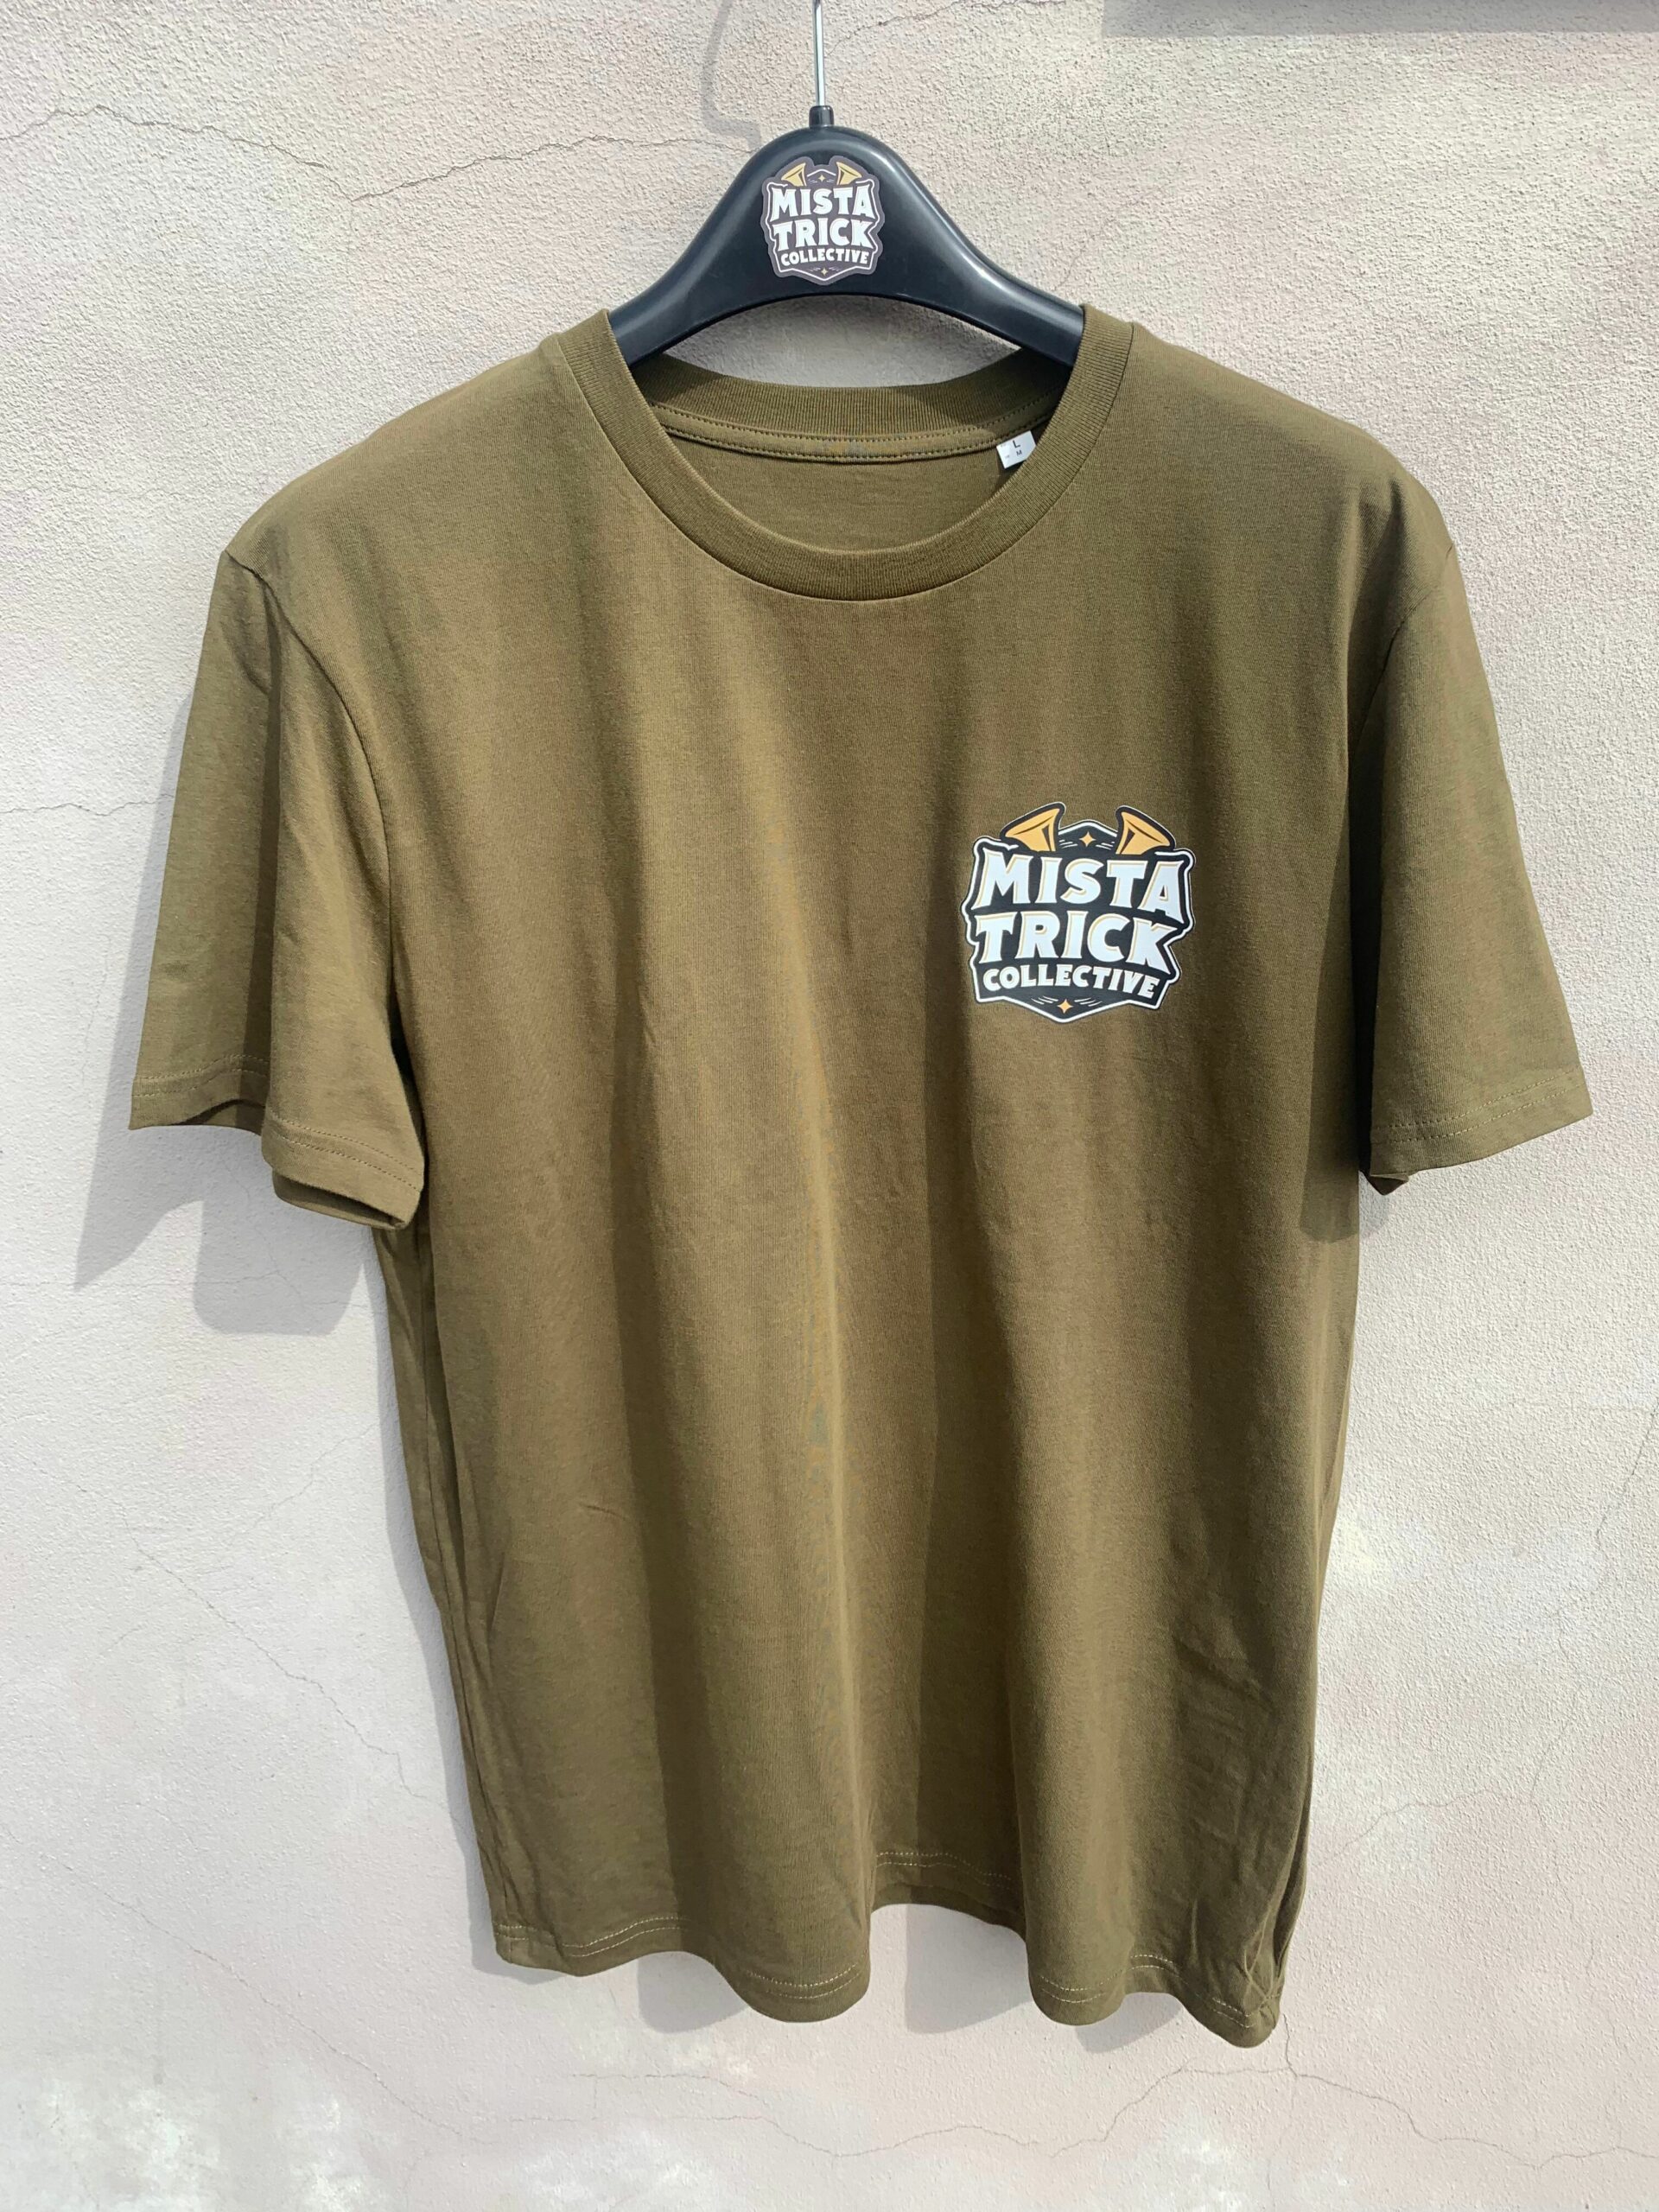 Mista Trick Collective T-Shirt Size: Extra Small (Khaki)